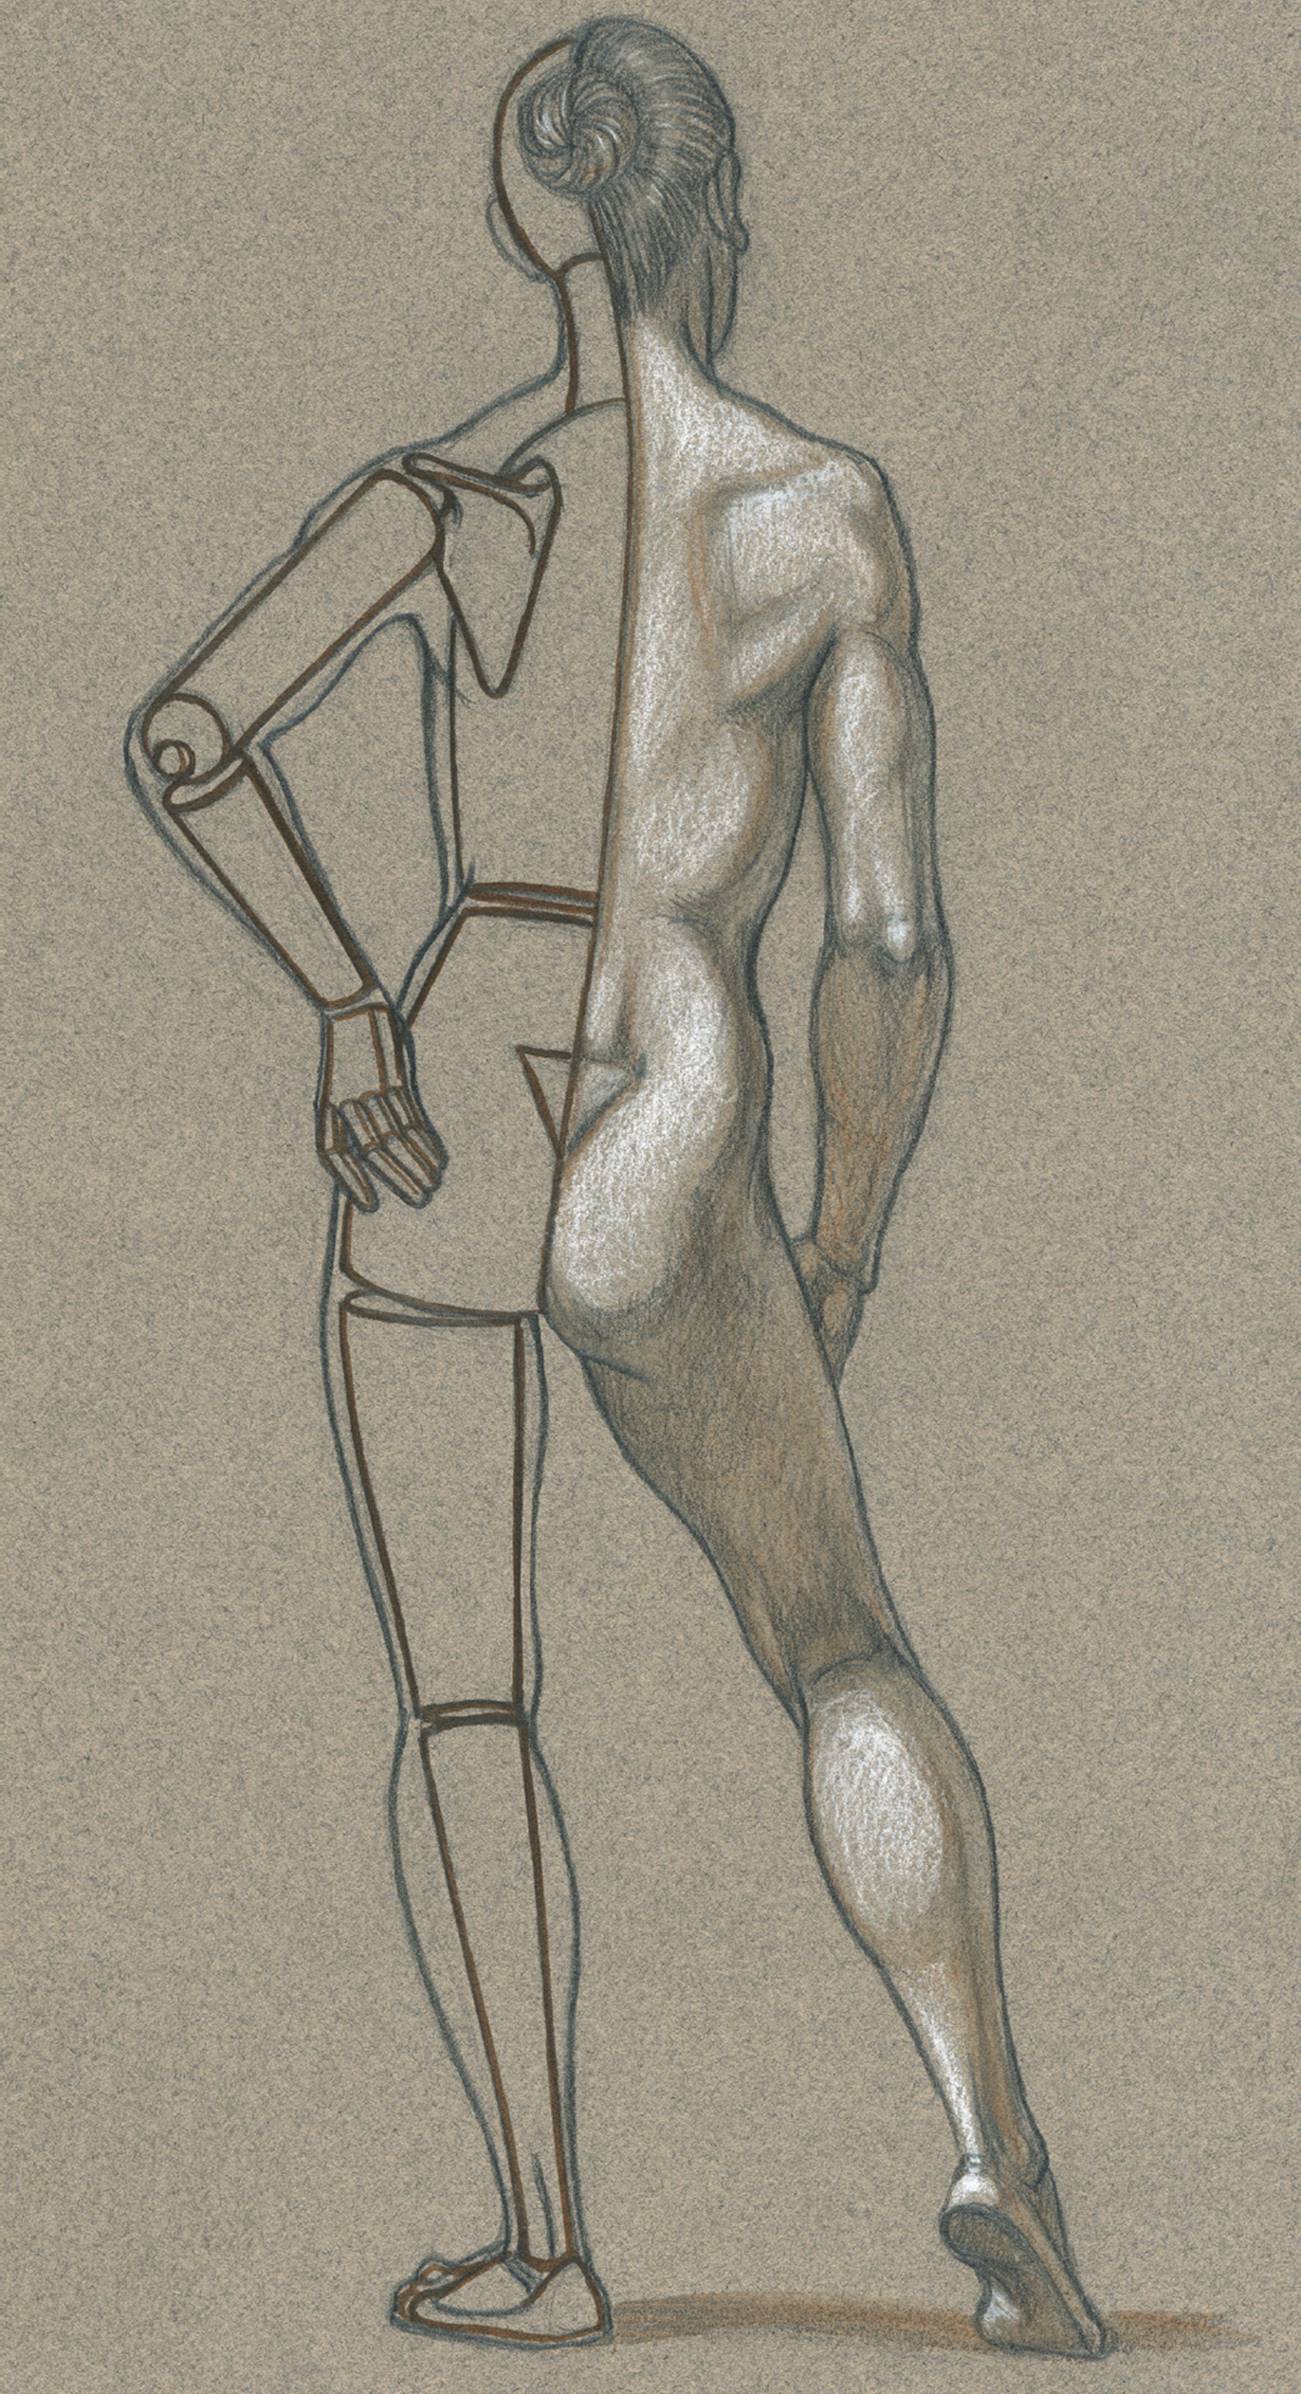 Drawing a human figure